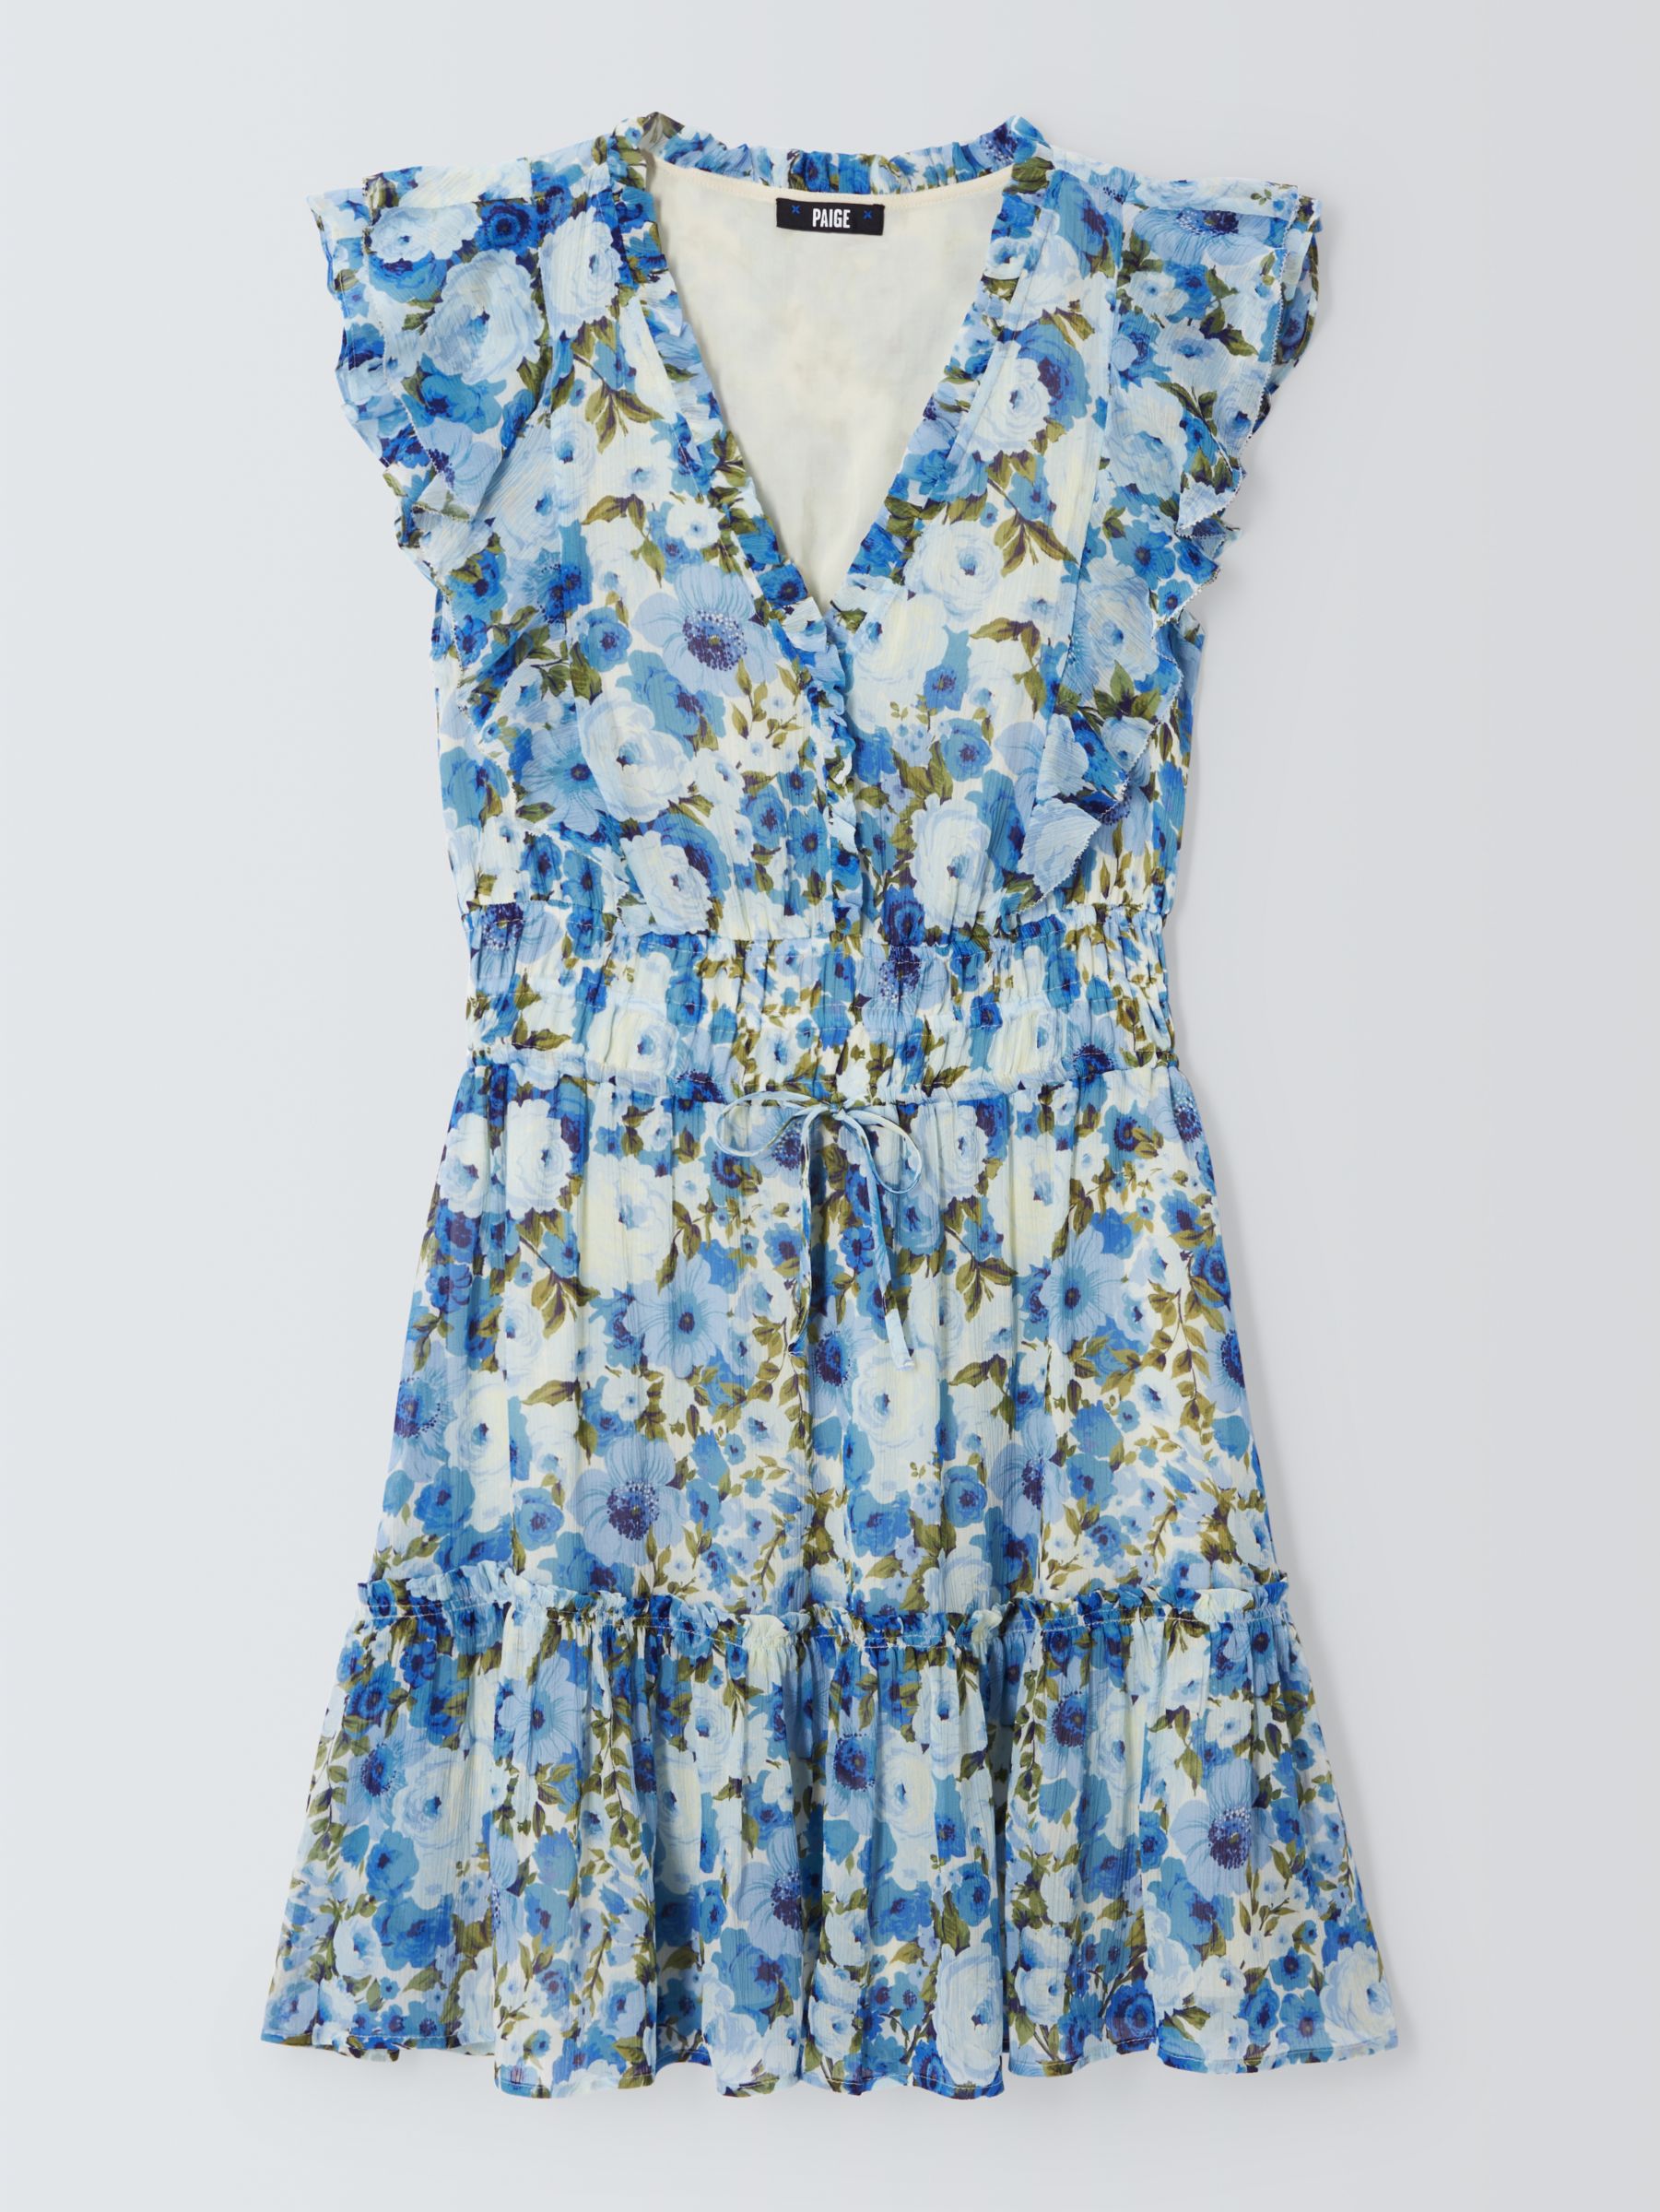 PAIGE Muriel Floral Print Silk Mini Dress, French Blue/Multi, XS